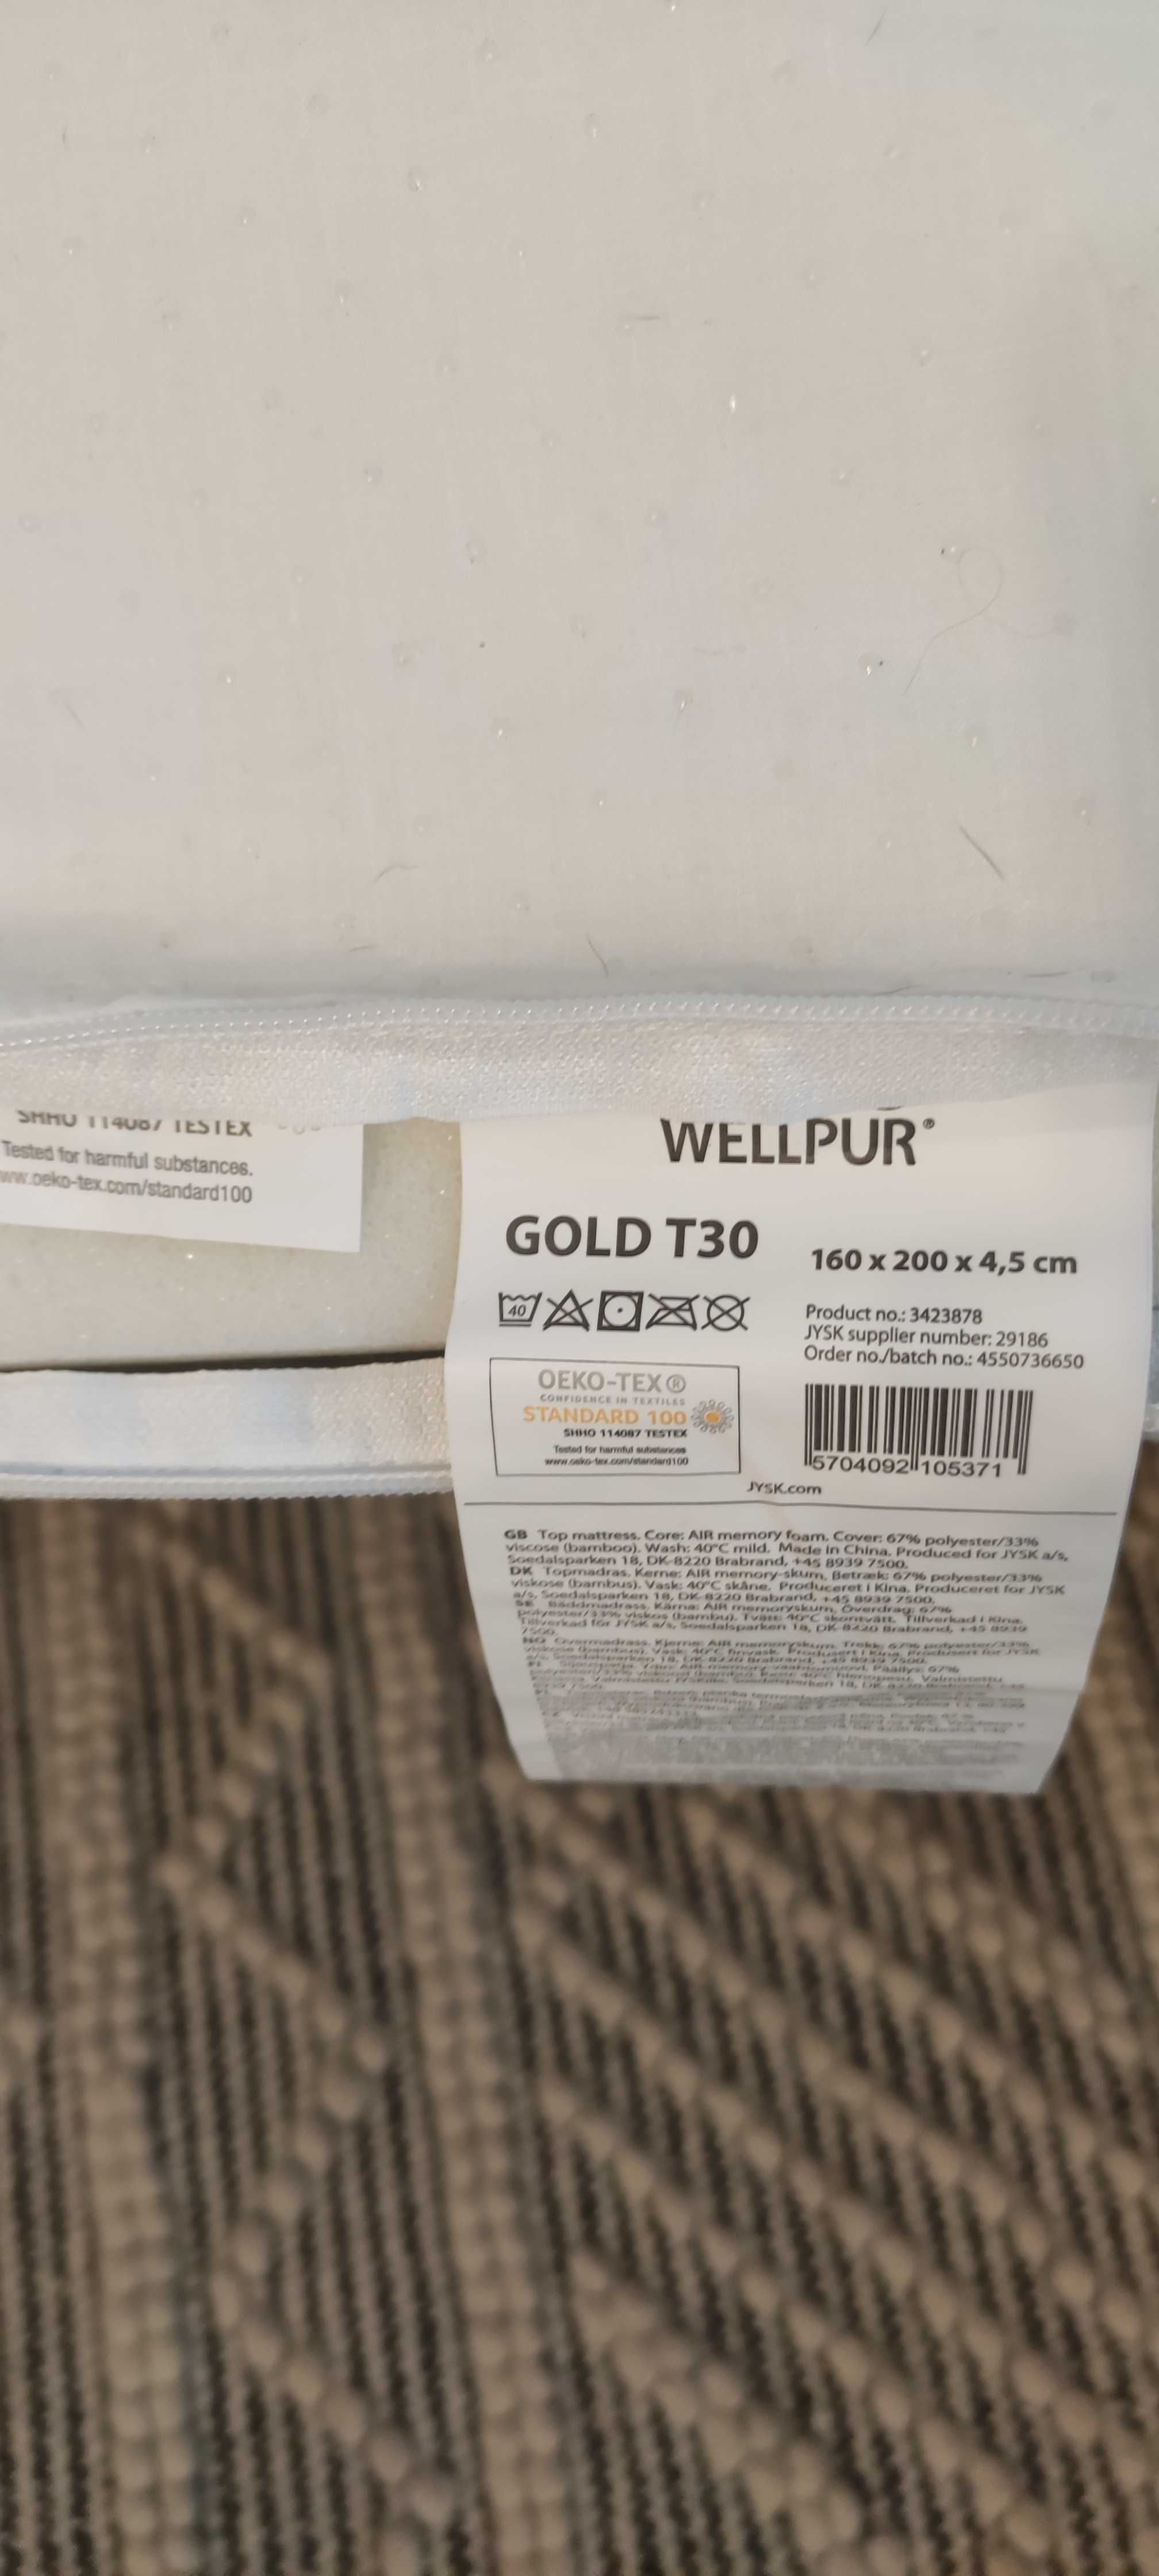 Top materac welpur gold t30 140x200x4,5 cm